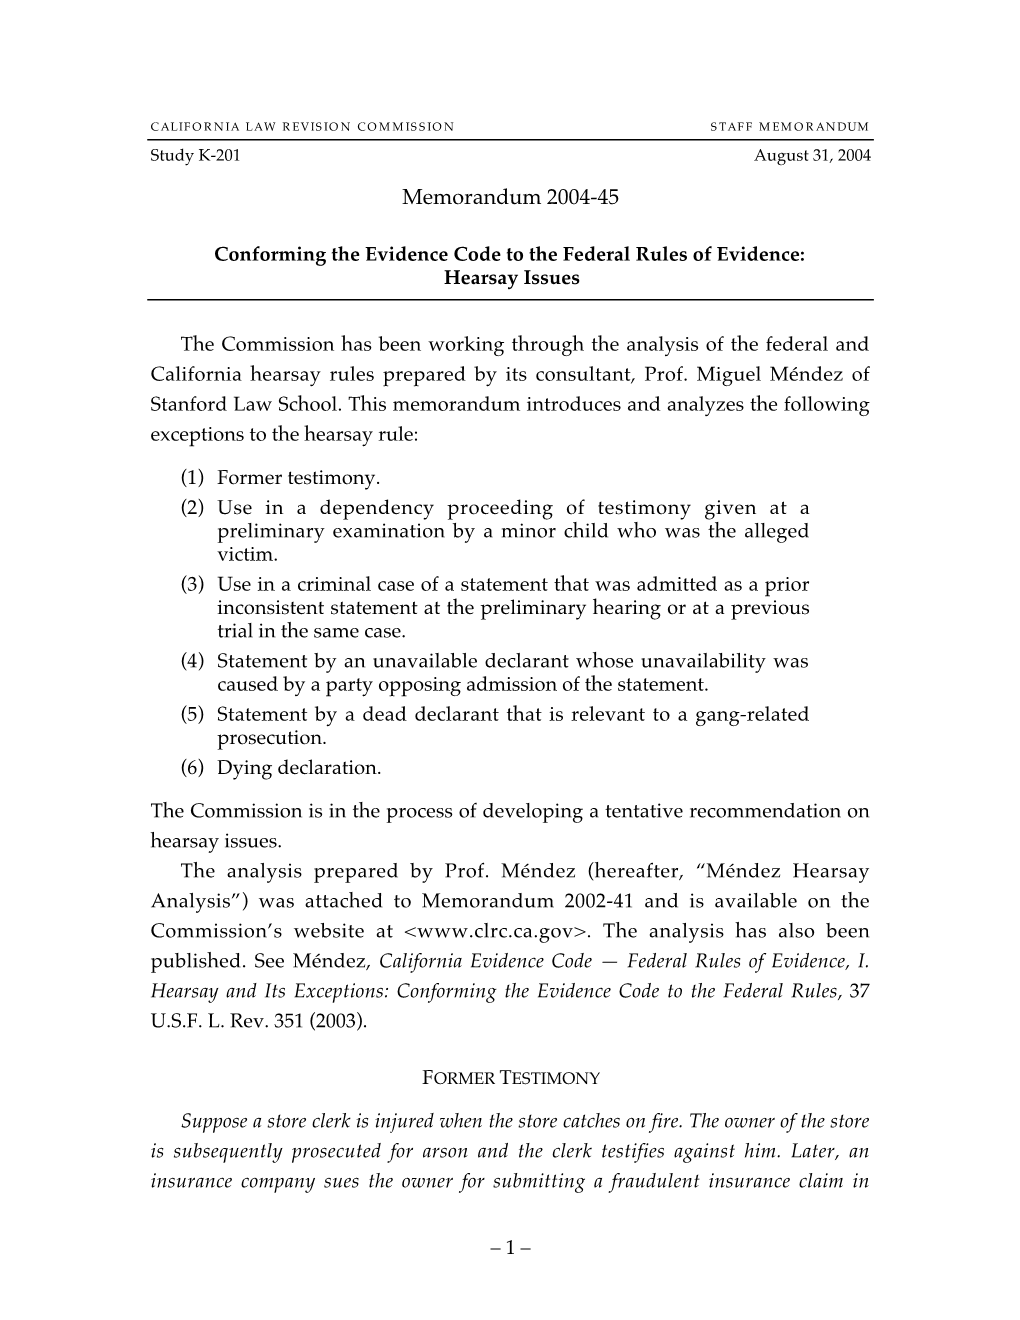 Memorandum 2004-45